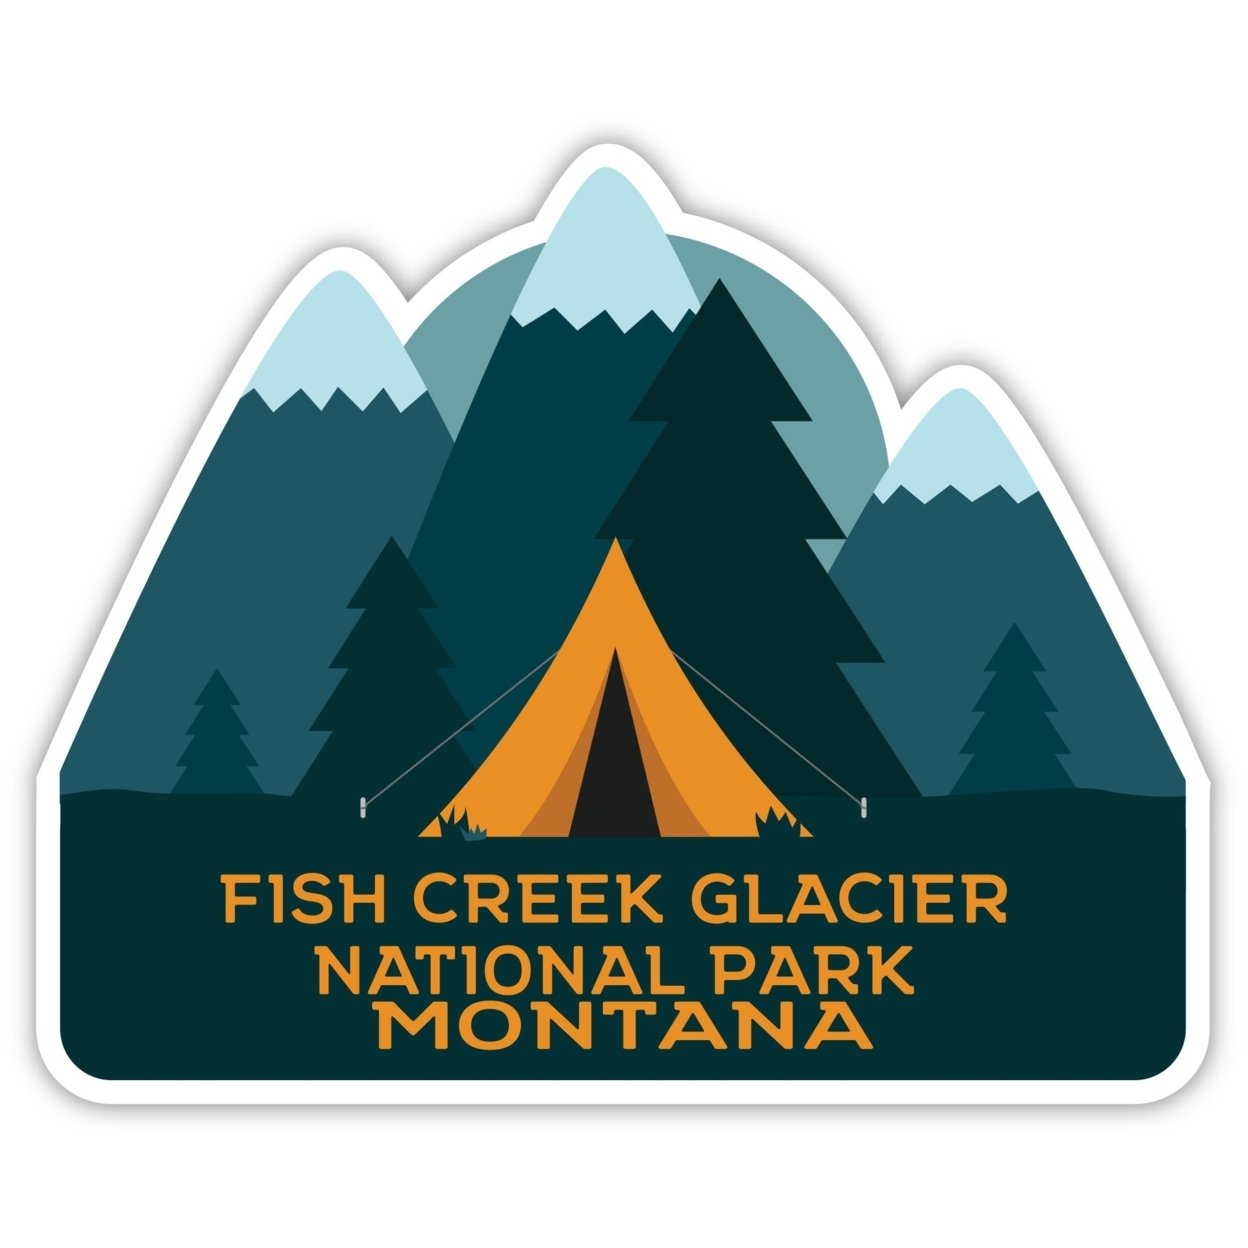 Fish Creek Glacier National Park Montana Souvenir Decorative Stickers (Choose Theme And Size) - 4-Pack, 10-Inch, Tent